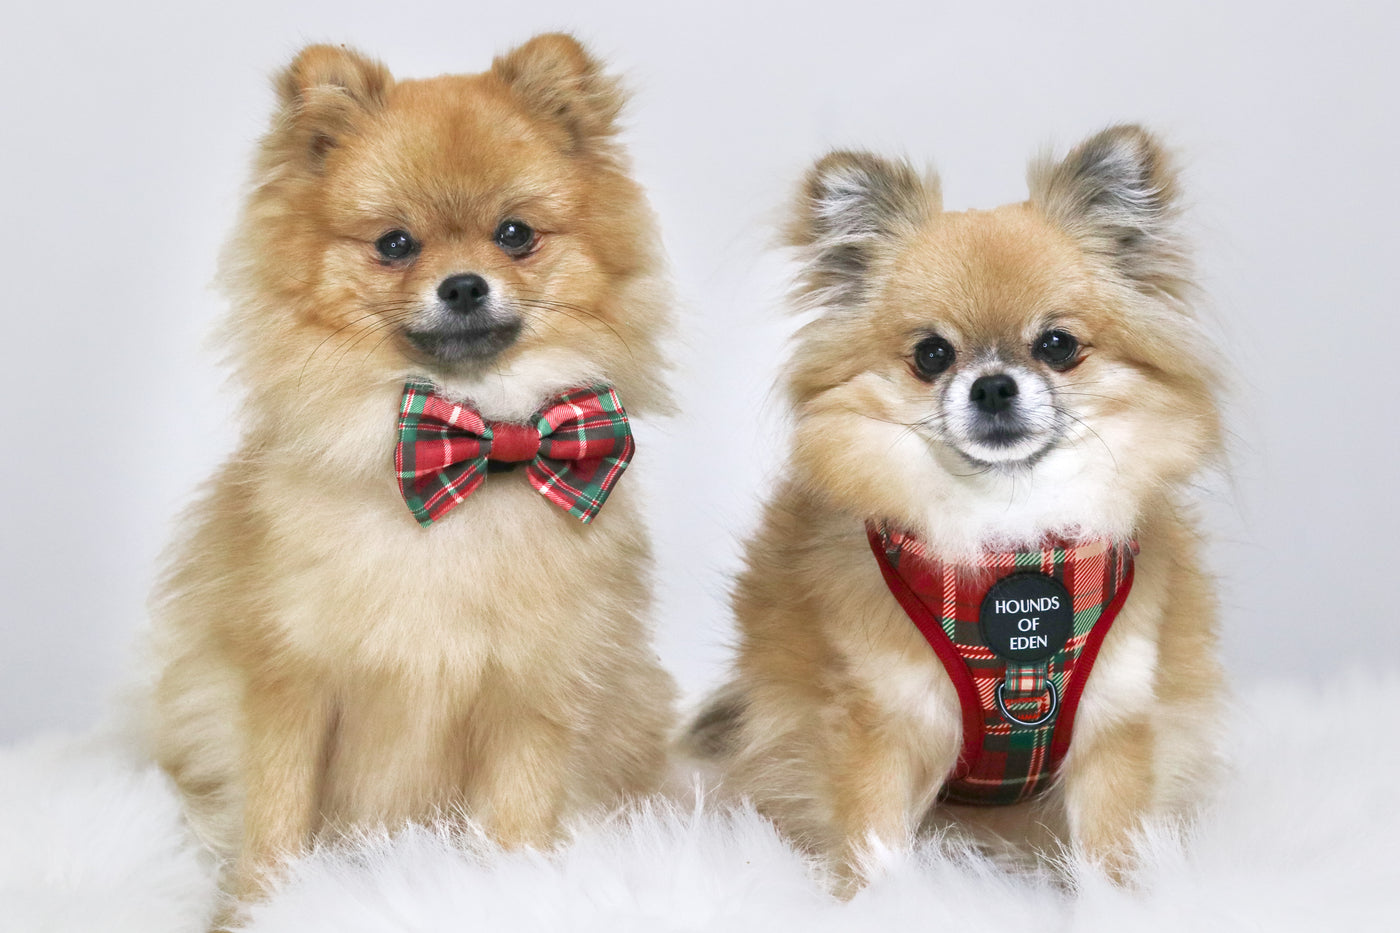 Tartan Me Up - Red & Cream Tartan Design Dog Harness